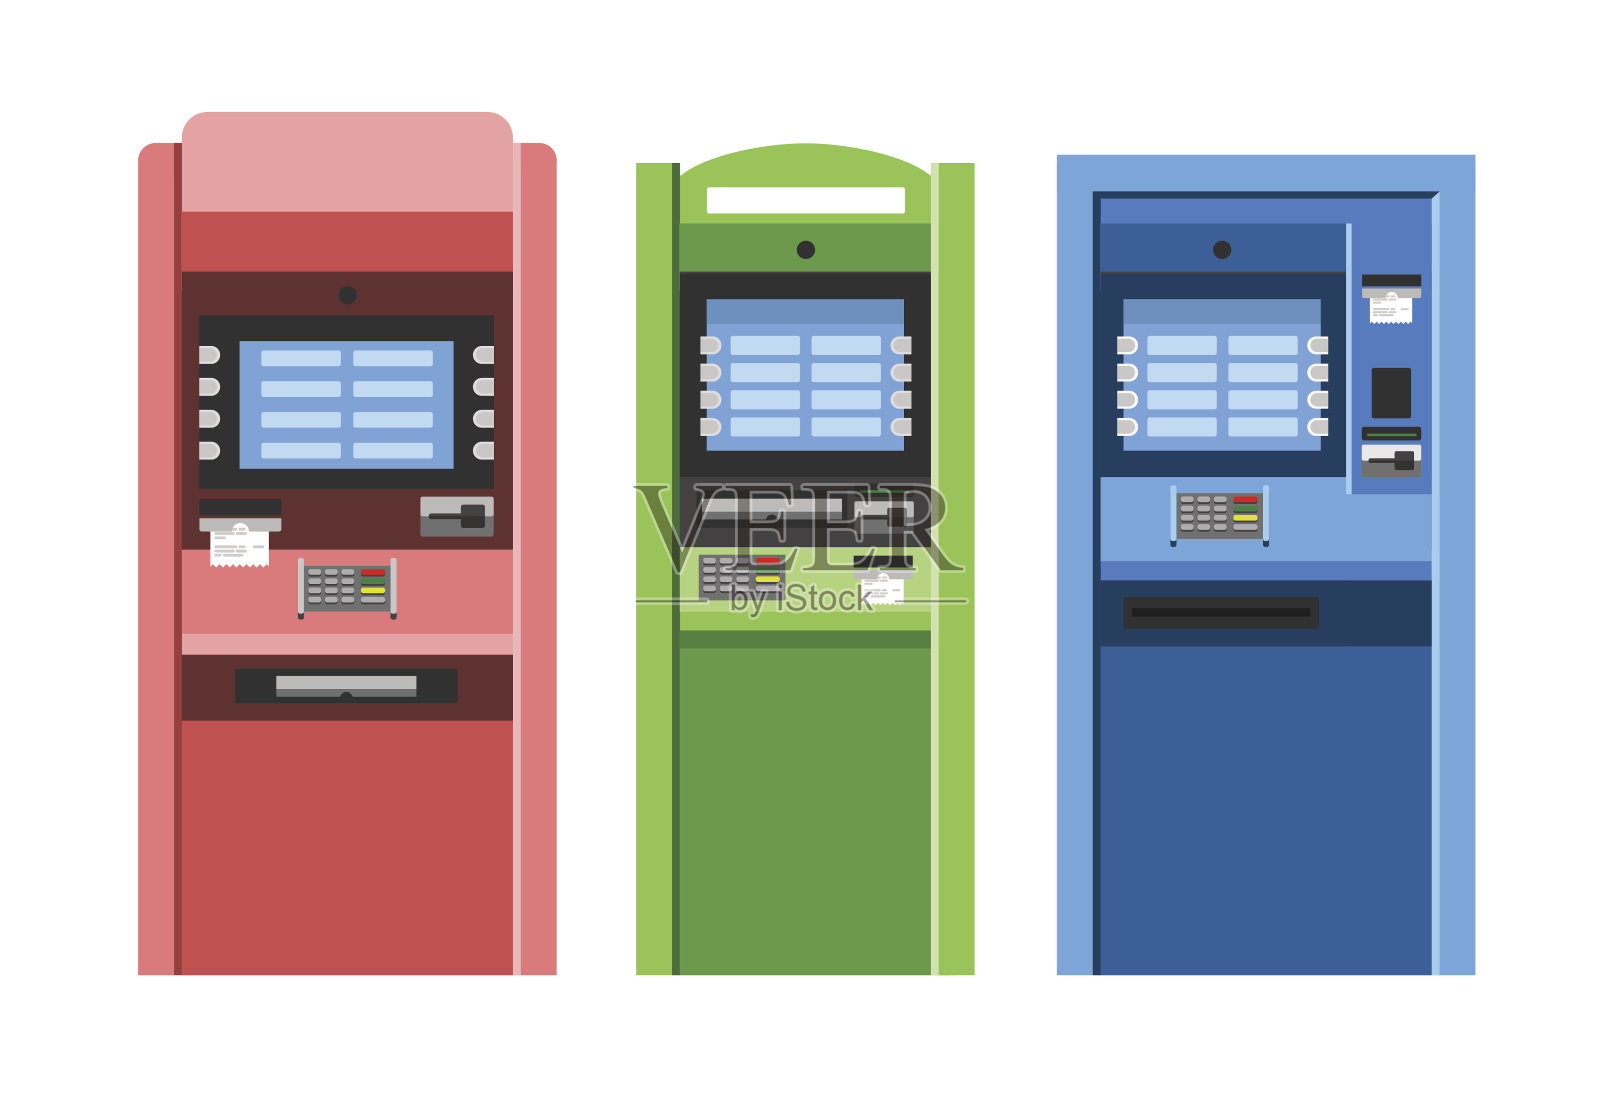 ATM机向量设置在平面风格。银行终端。插画图片素材